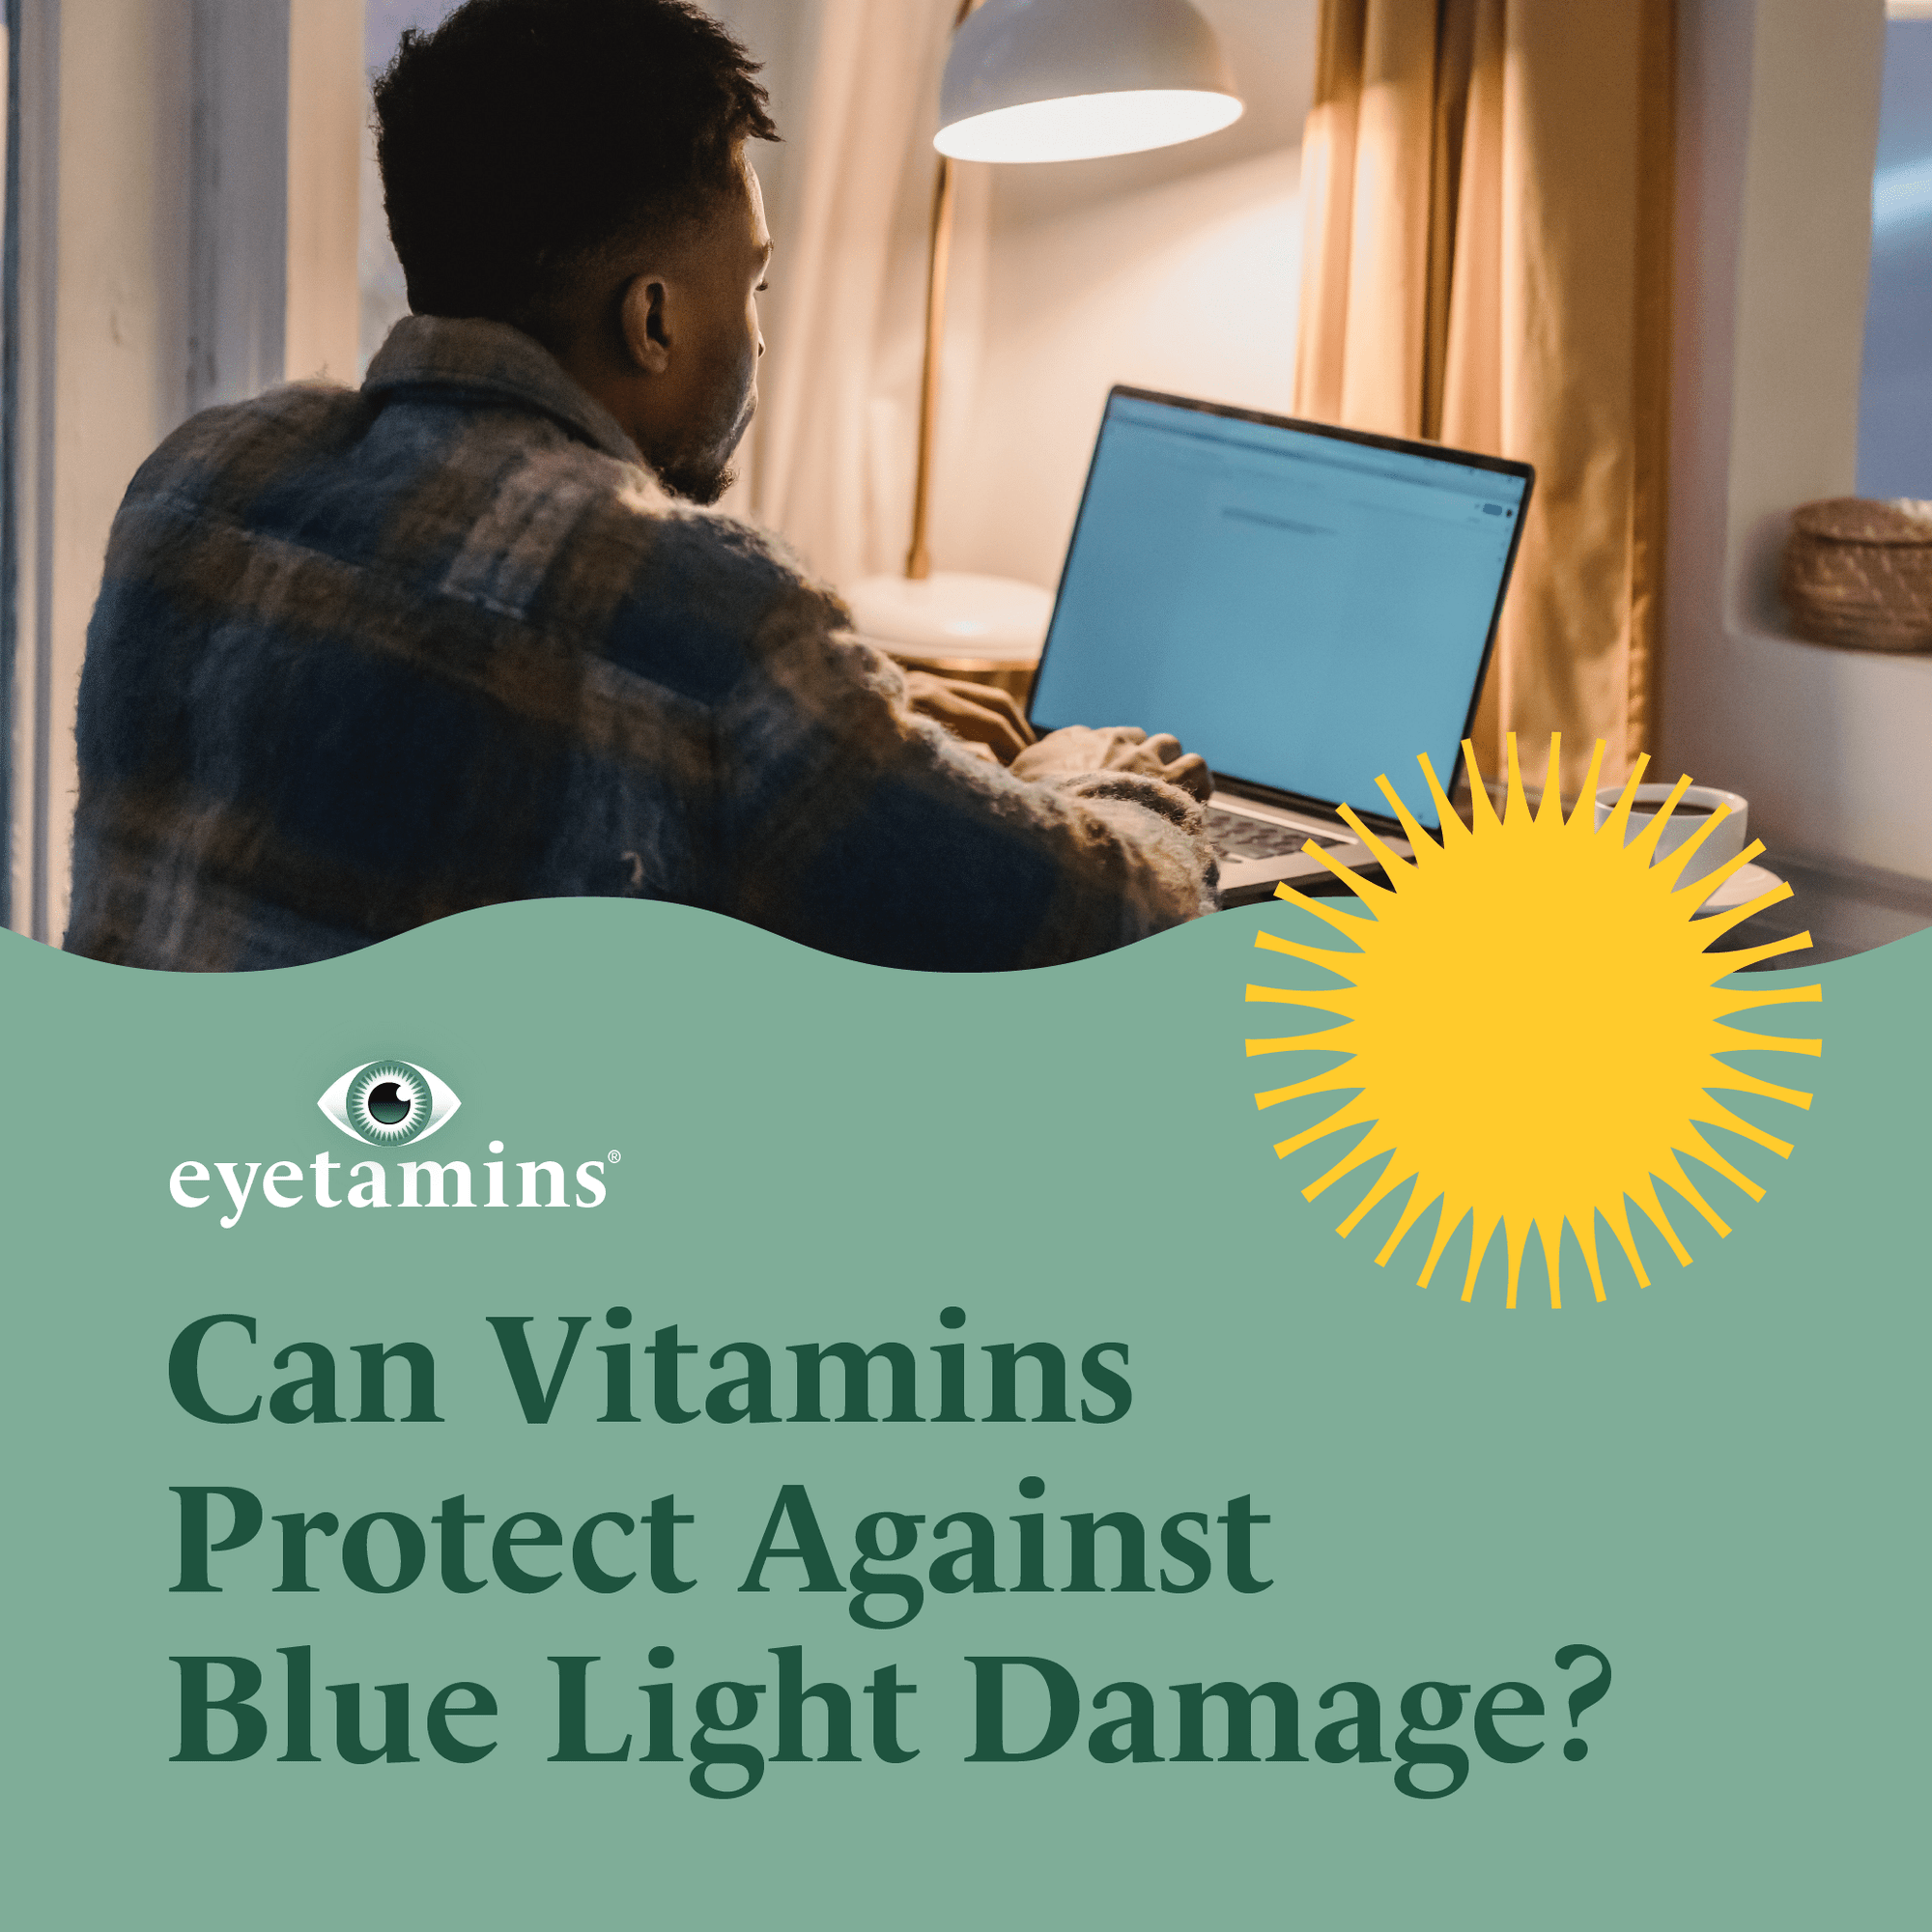 Eyetamins - Can Vitamins Protect Against Blue Light Damage?